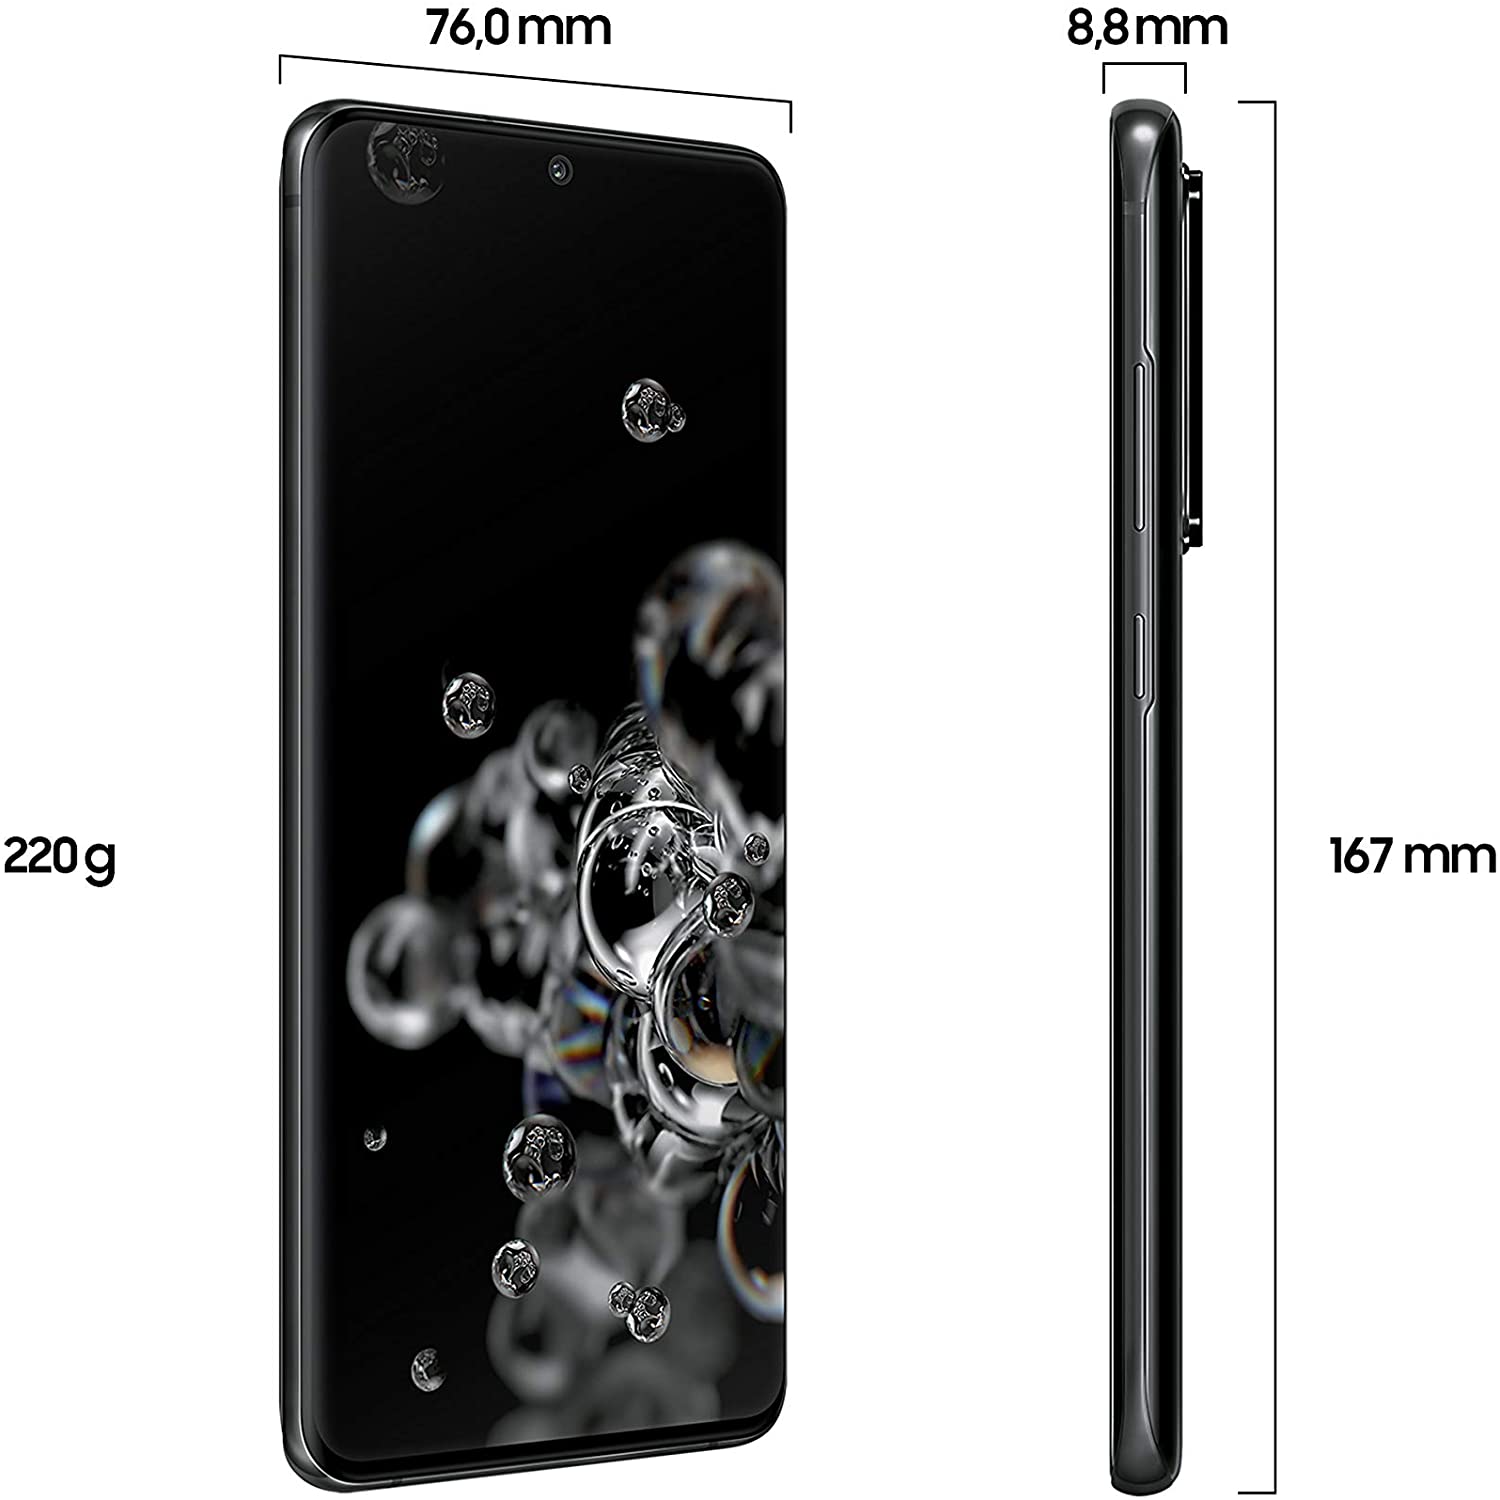 samsung galaxy s20 ultra 5g smartphone bundle, 128 gb, black